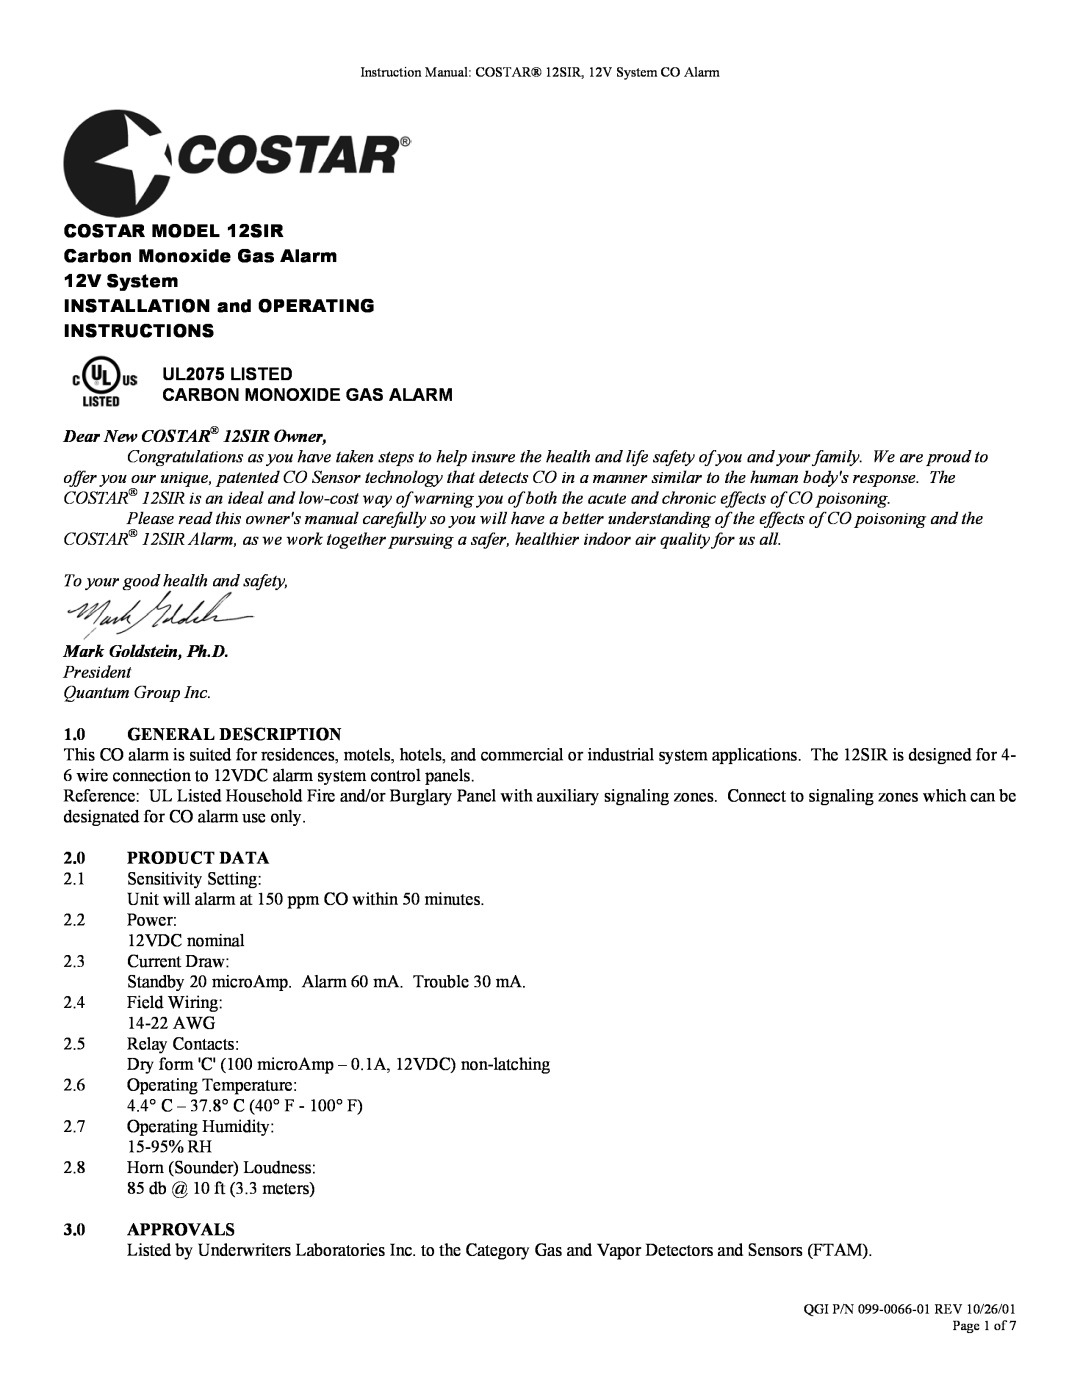 Costar instruction manual COSTAR MODEL 12SIR Carbon Monoxide Gas Alarm, 12V System INSTALLATION and OPERATING 